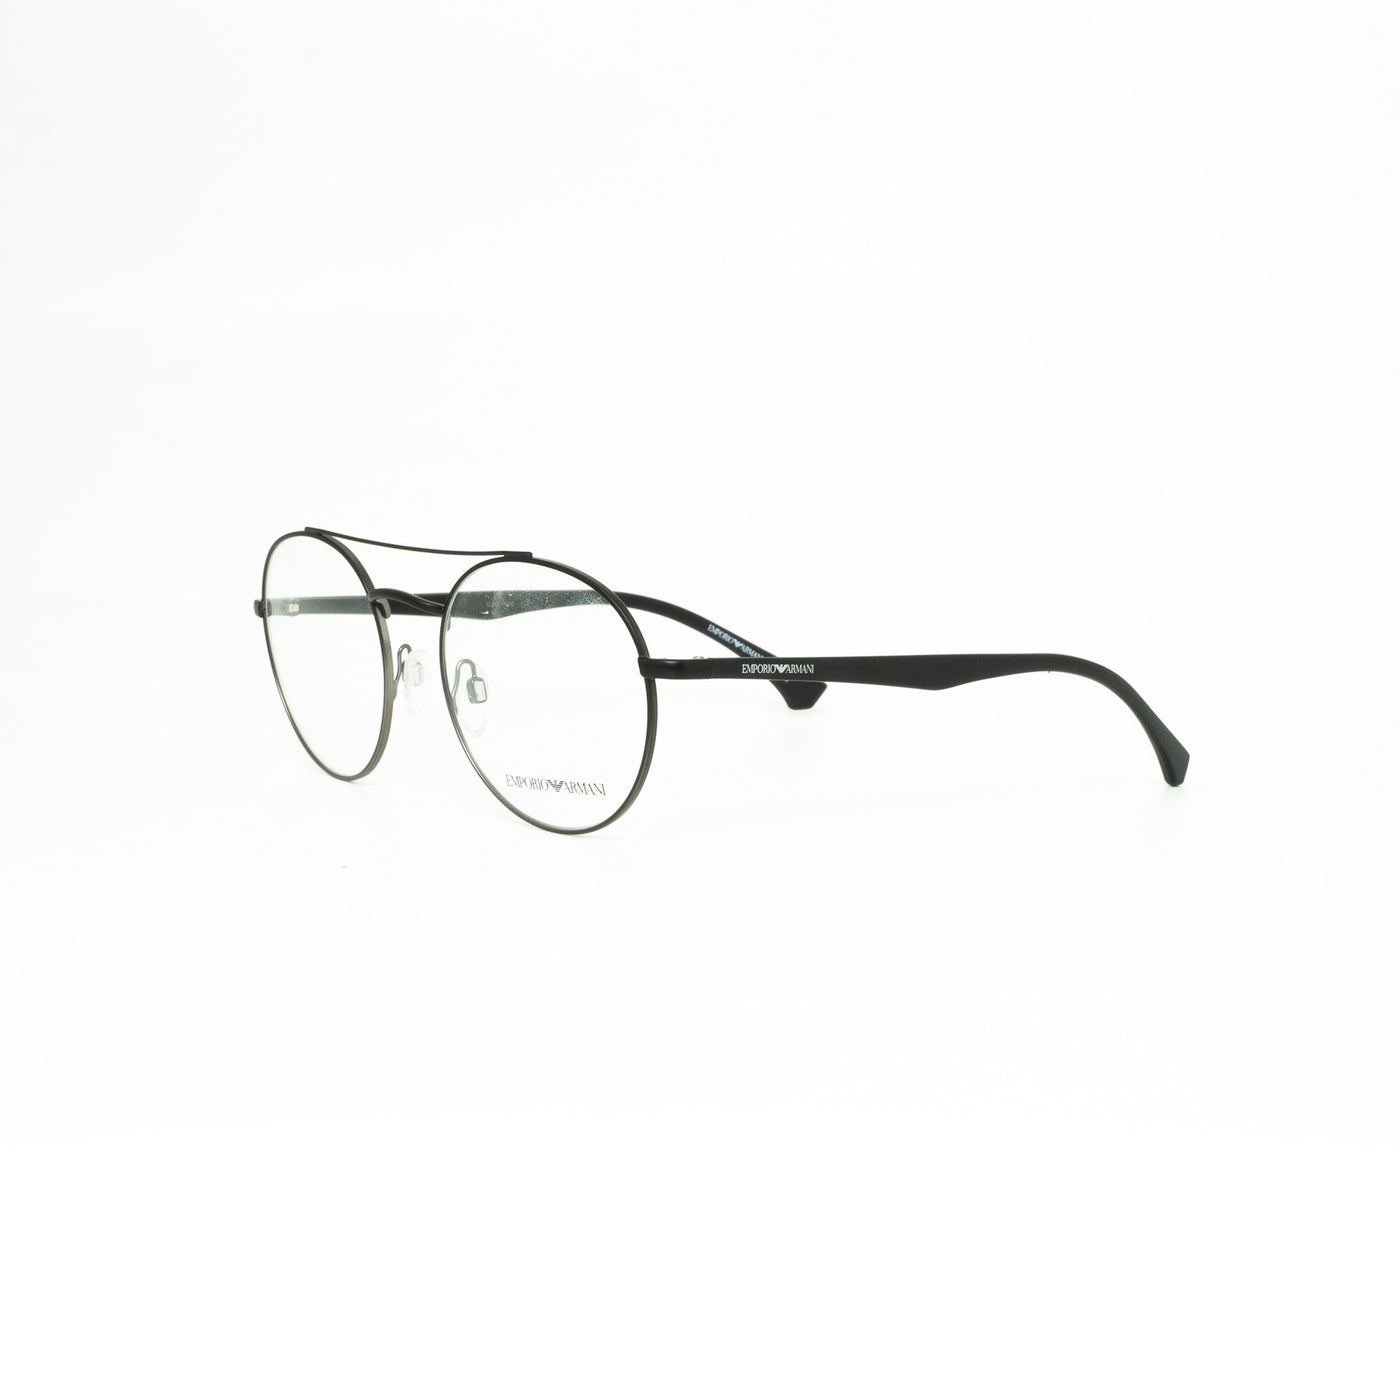 Emporio Armani EA1107331653 | Eyeglasses - Vision Express Optical Philippines